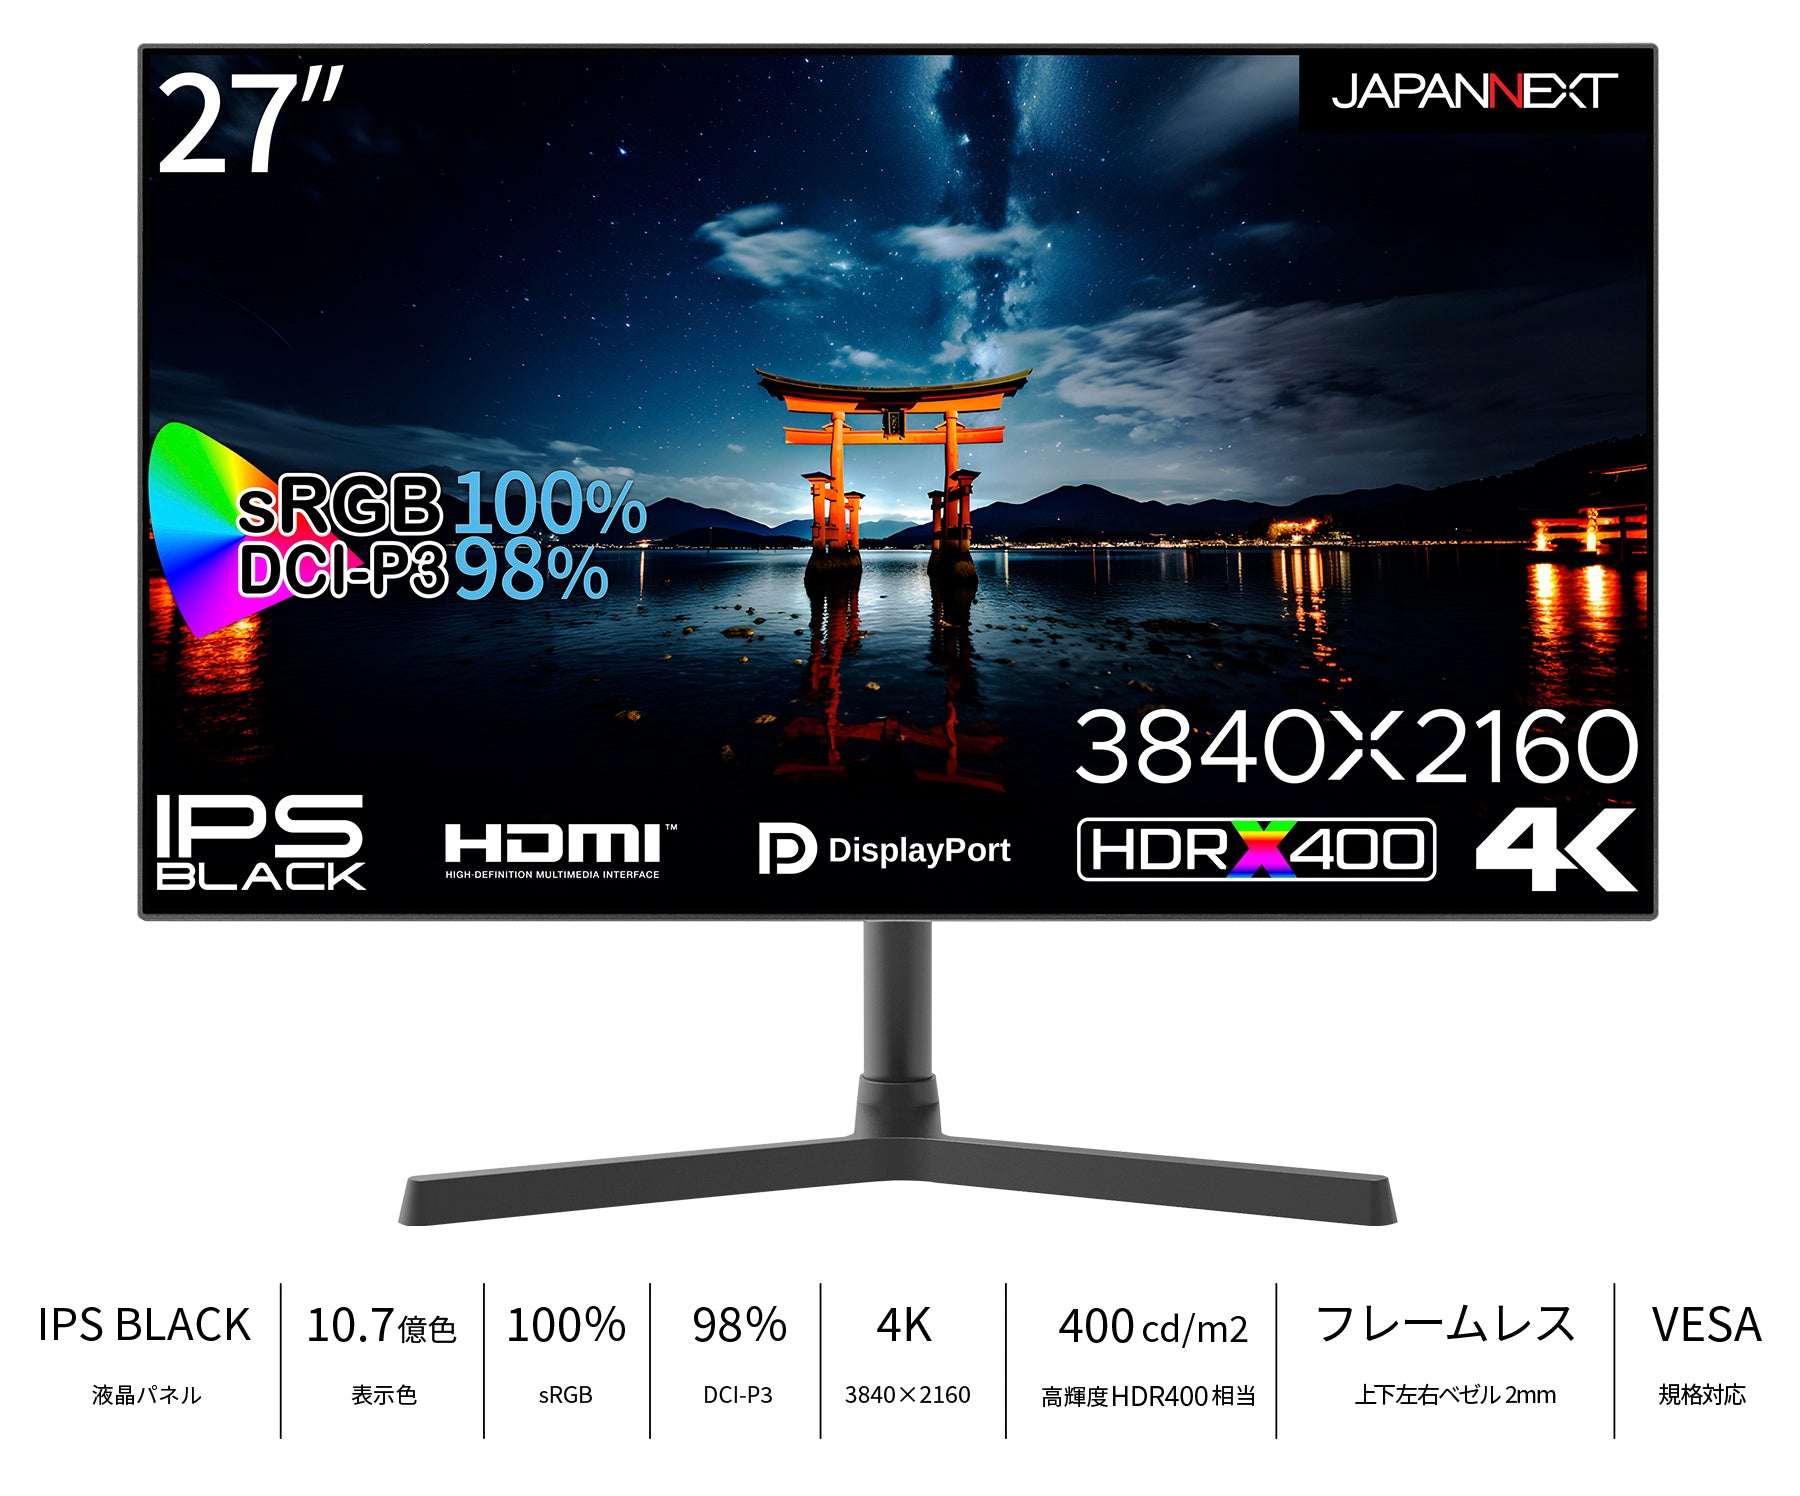 JAPANNEXT 27インチ IPS BLACKパネル搭載 4K(3840x2160)解像度 液晶